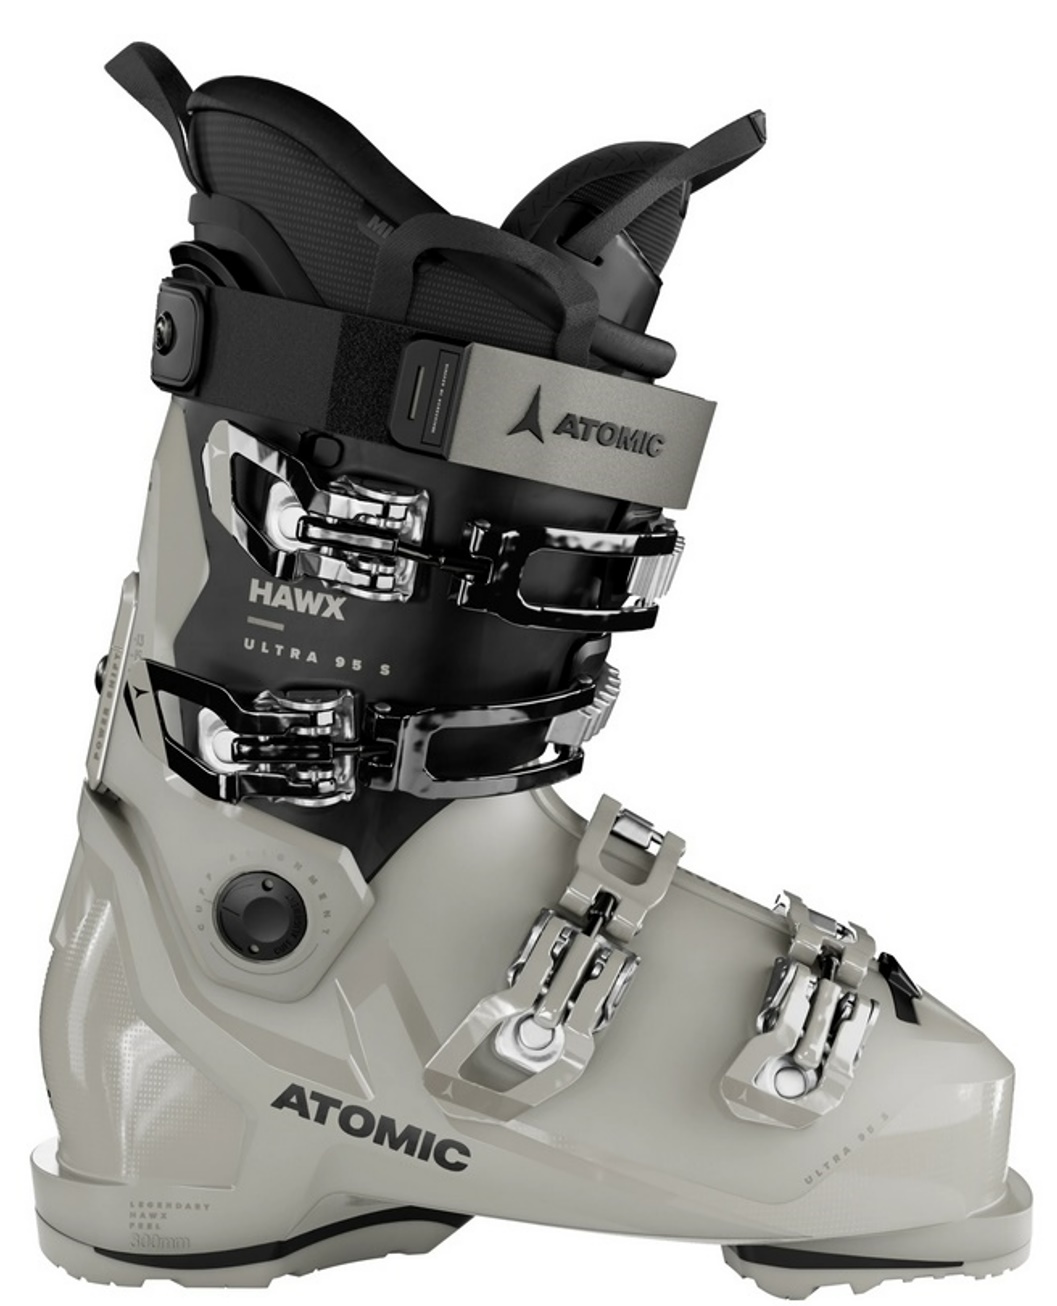 Atomic Damen Skischuhe Hawx Ultra 95 S W GW grau